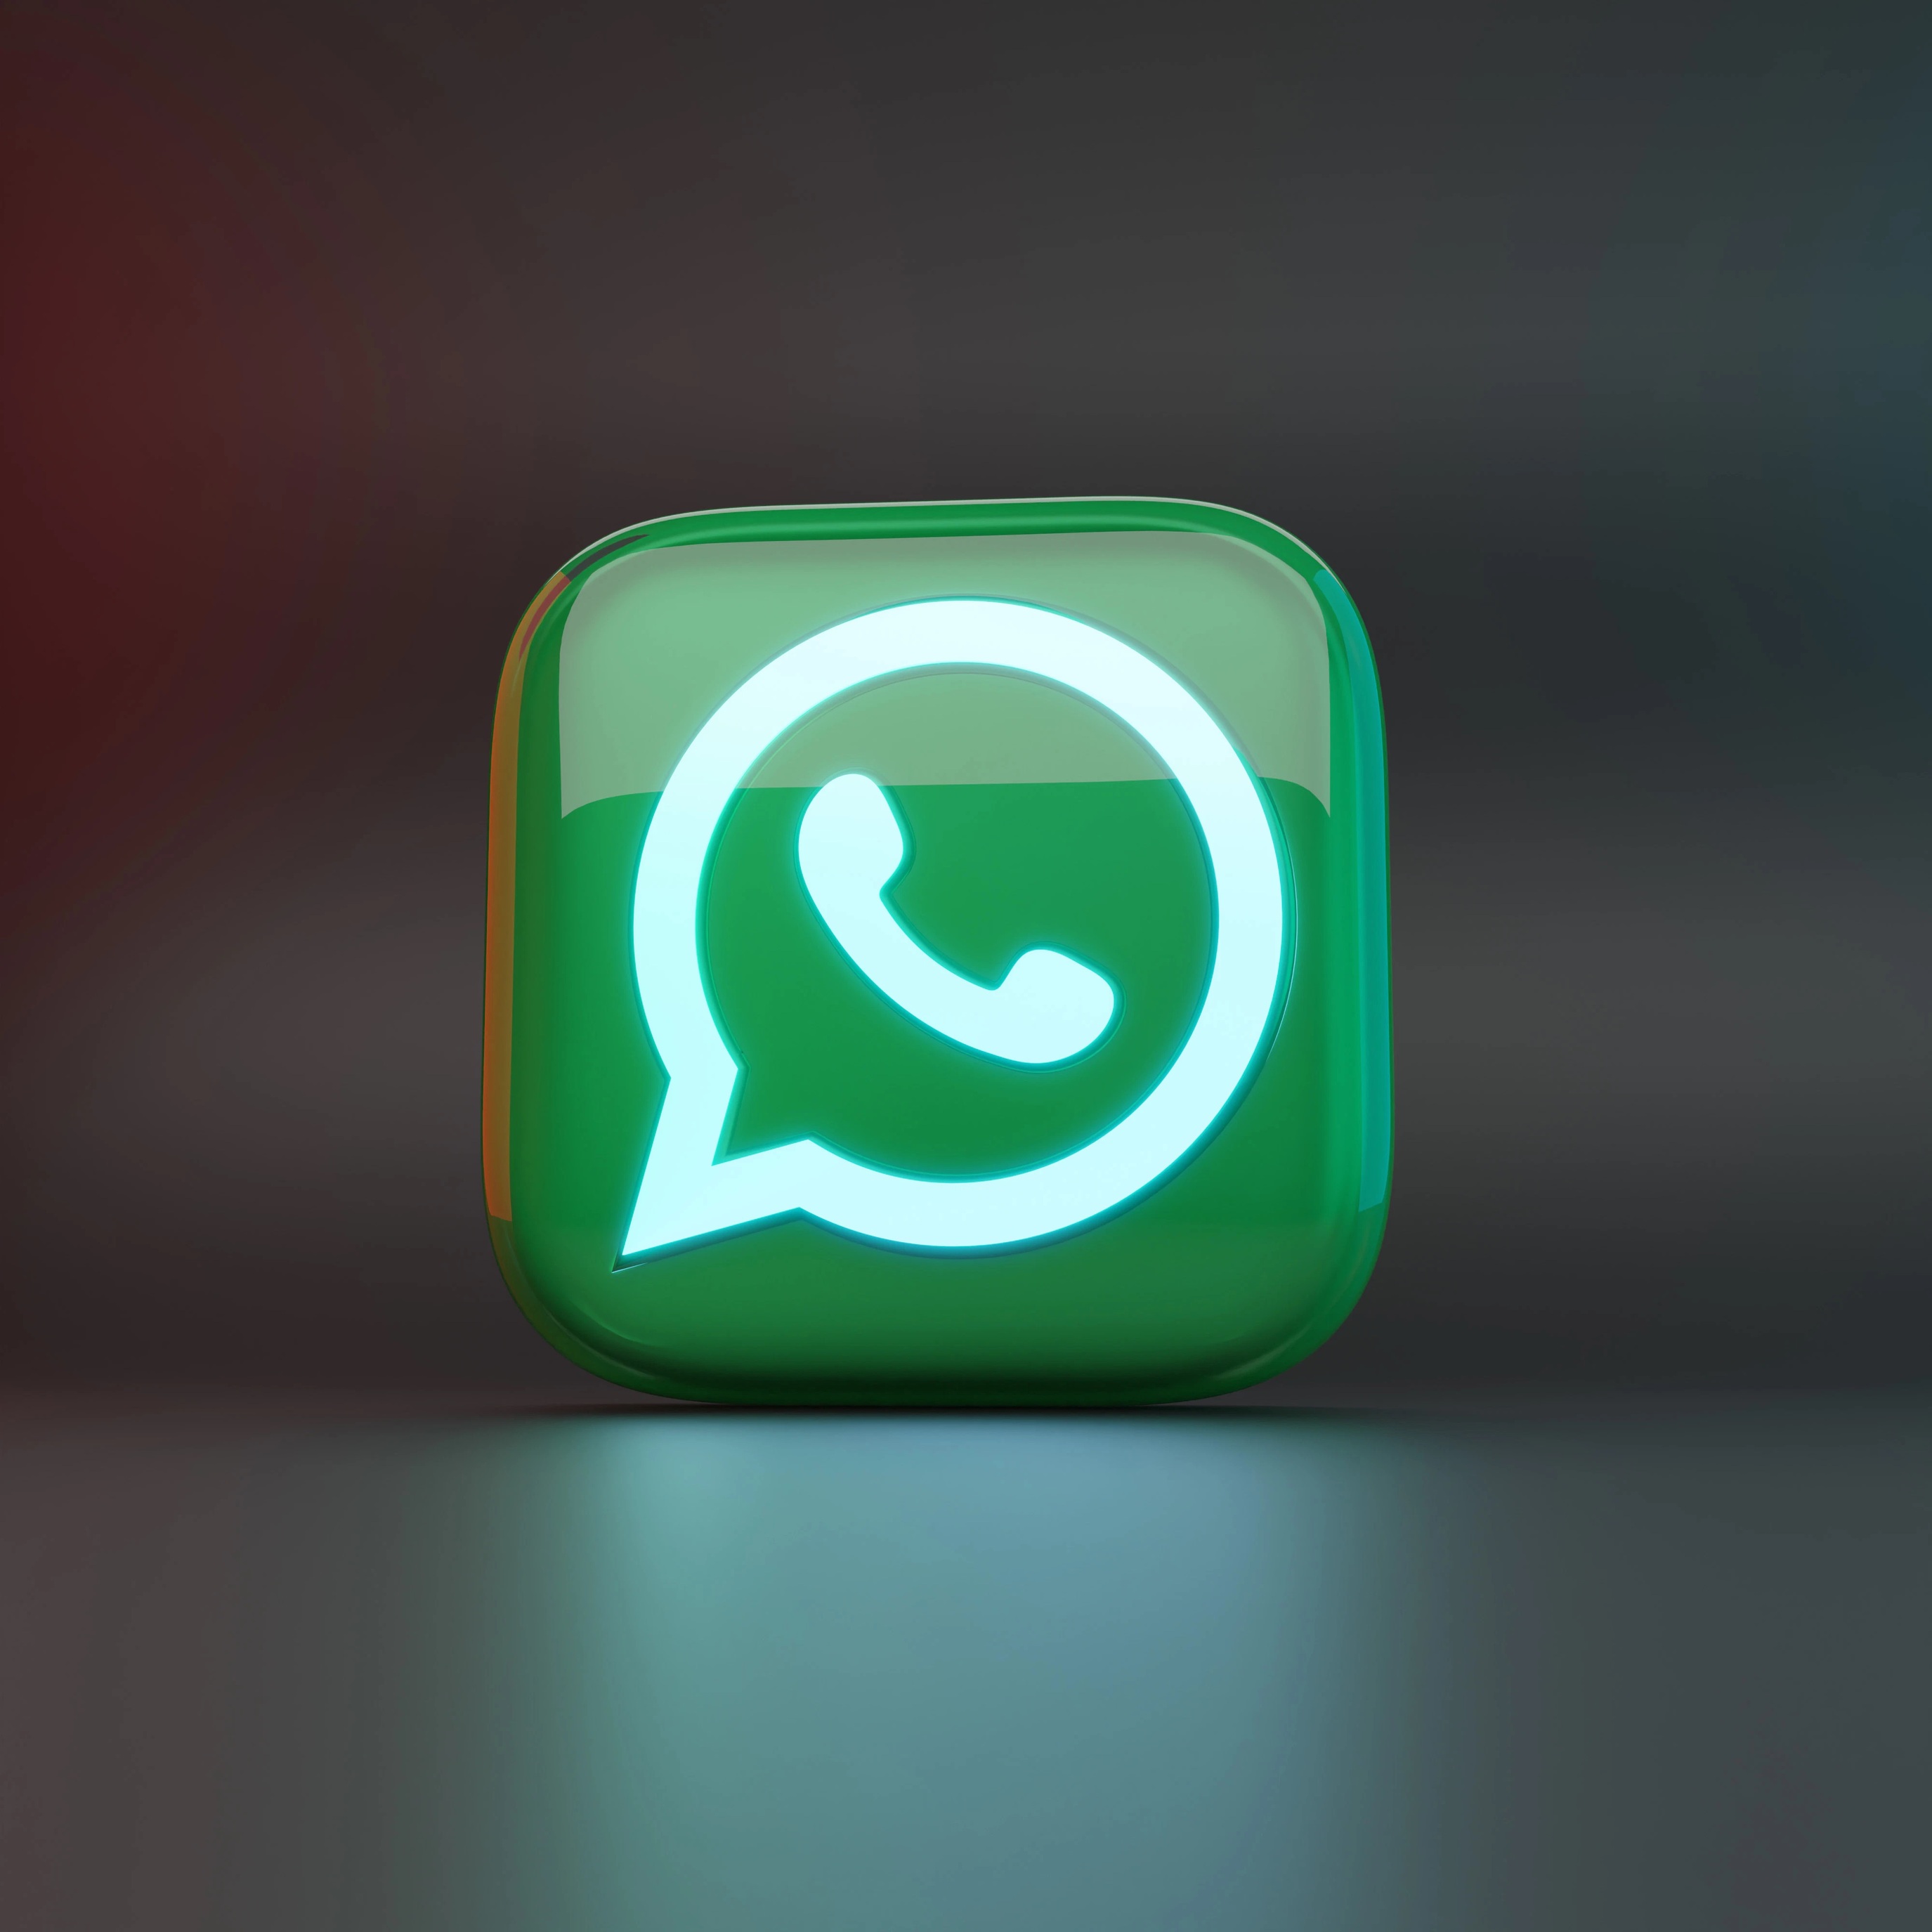 В WhatsApp на Android появится блокировка приложения по паролю и биометрии